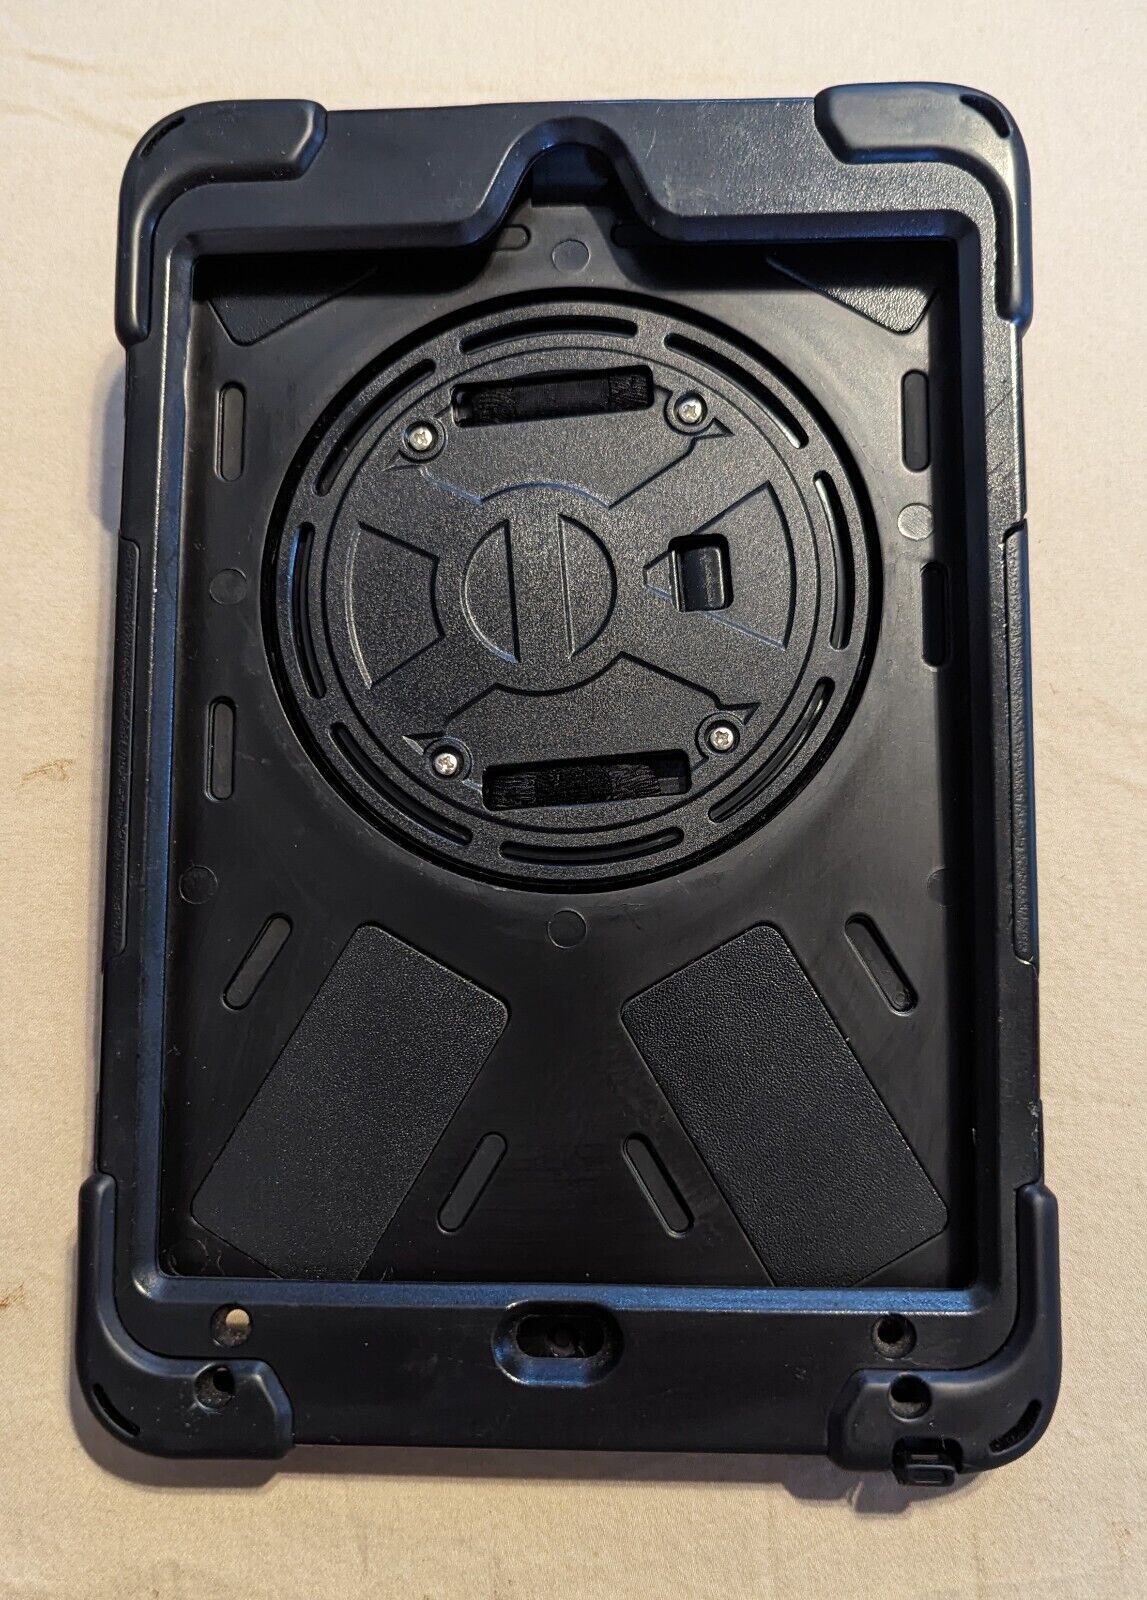 BRAECN Heavy Duty shockproof Case, Fits ipad mini 5th generation 7.9in